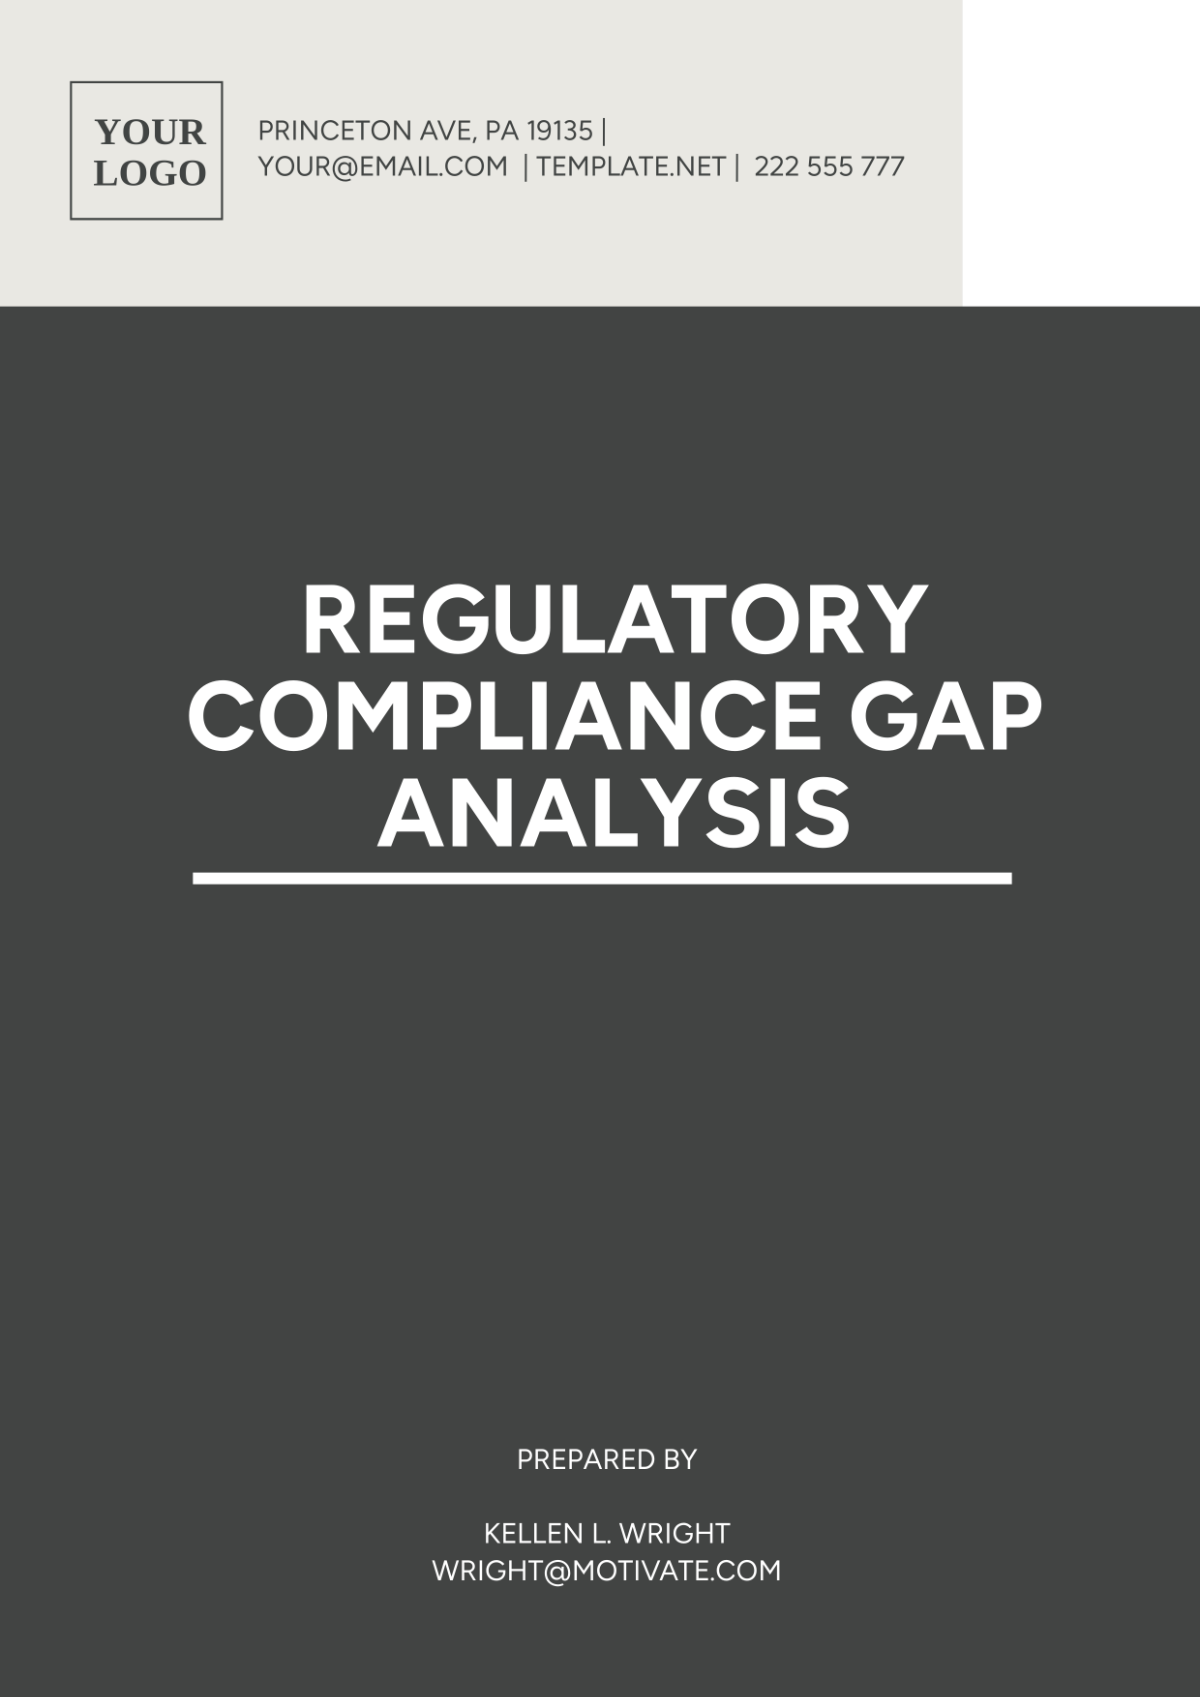 Regulatory Compliance Gap Analysis Template